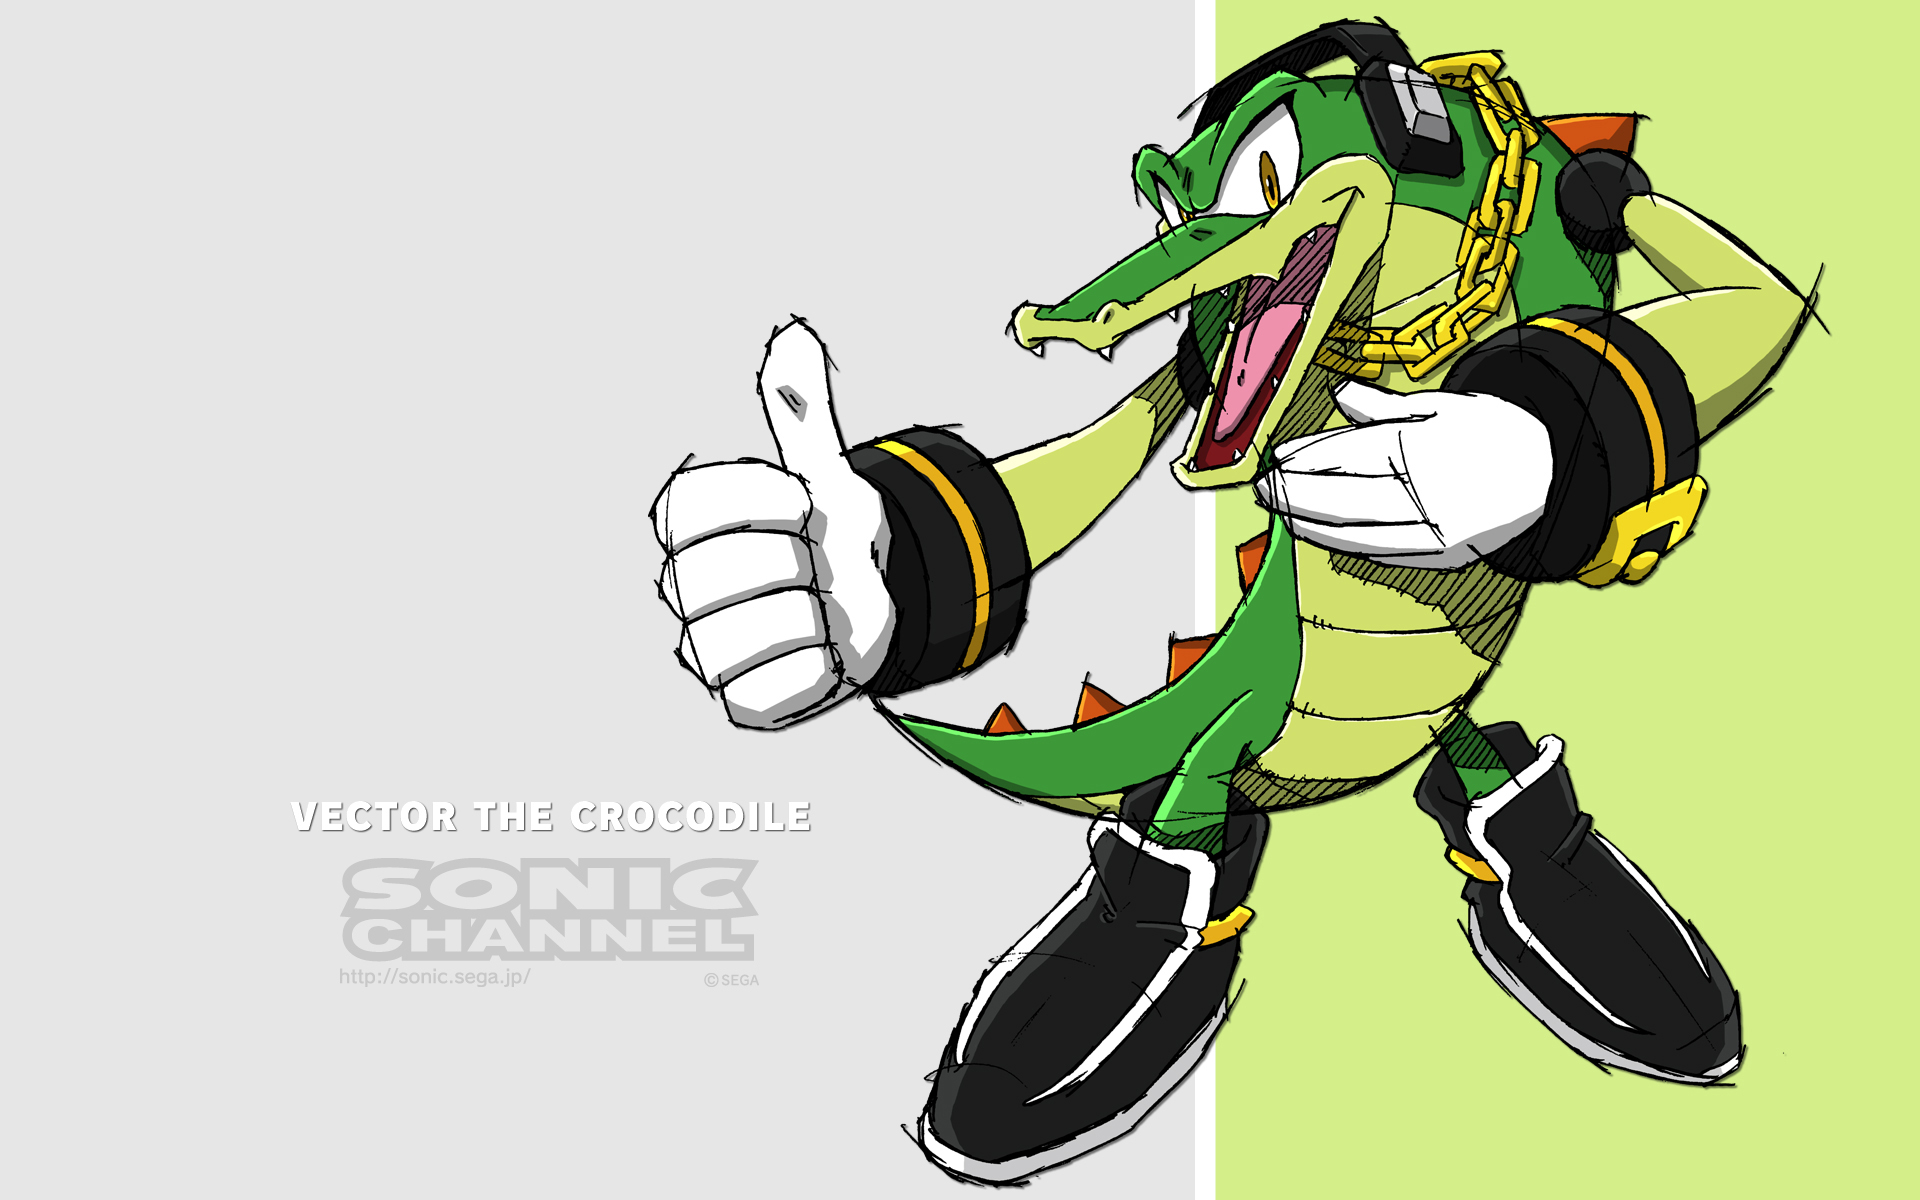 Sonic Channel Vector The Crocodile 1920x1200